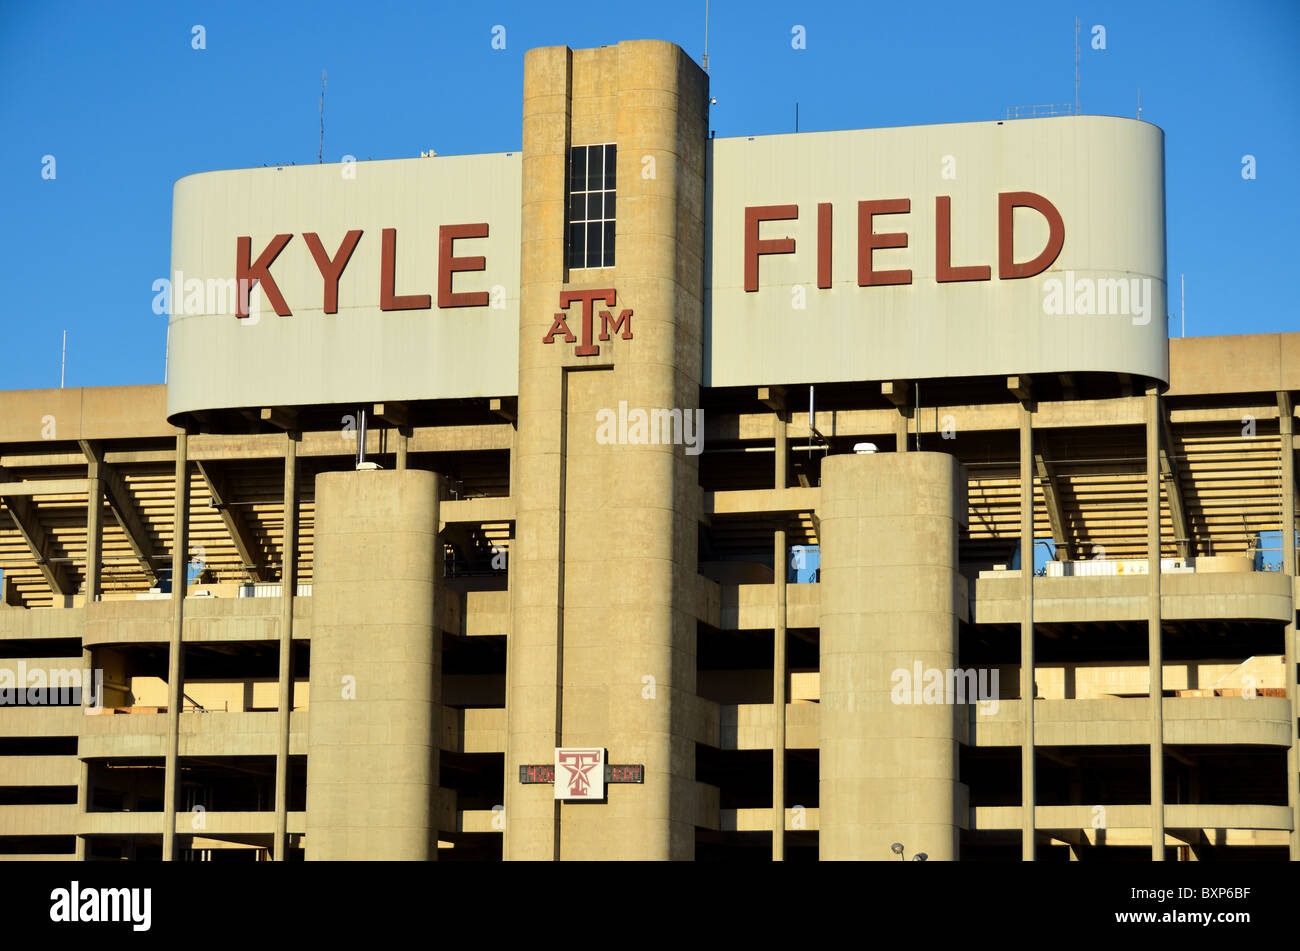 Kyle field, Texas A&M University, College Station, Texas, USA. Stock Photo